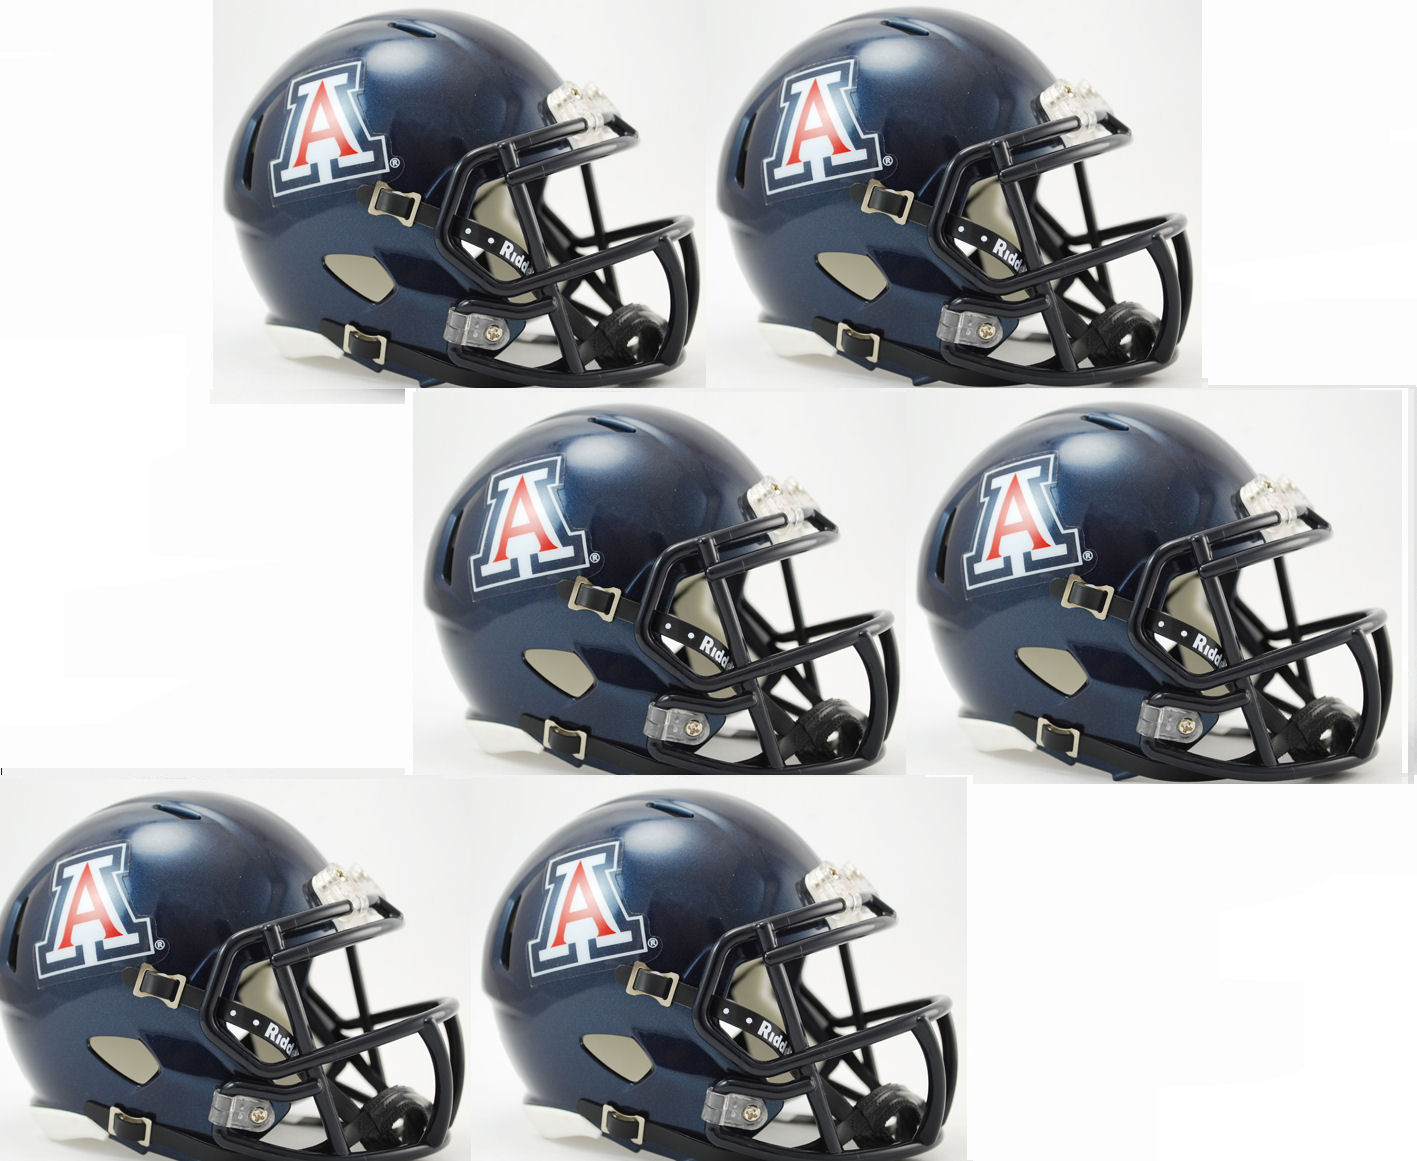 Arizona Wildcats NCAA Mini Speed Football Helmet 6 count